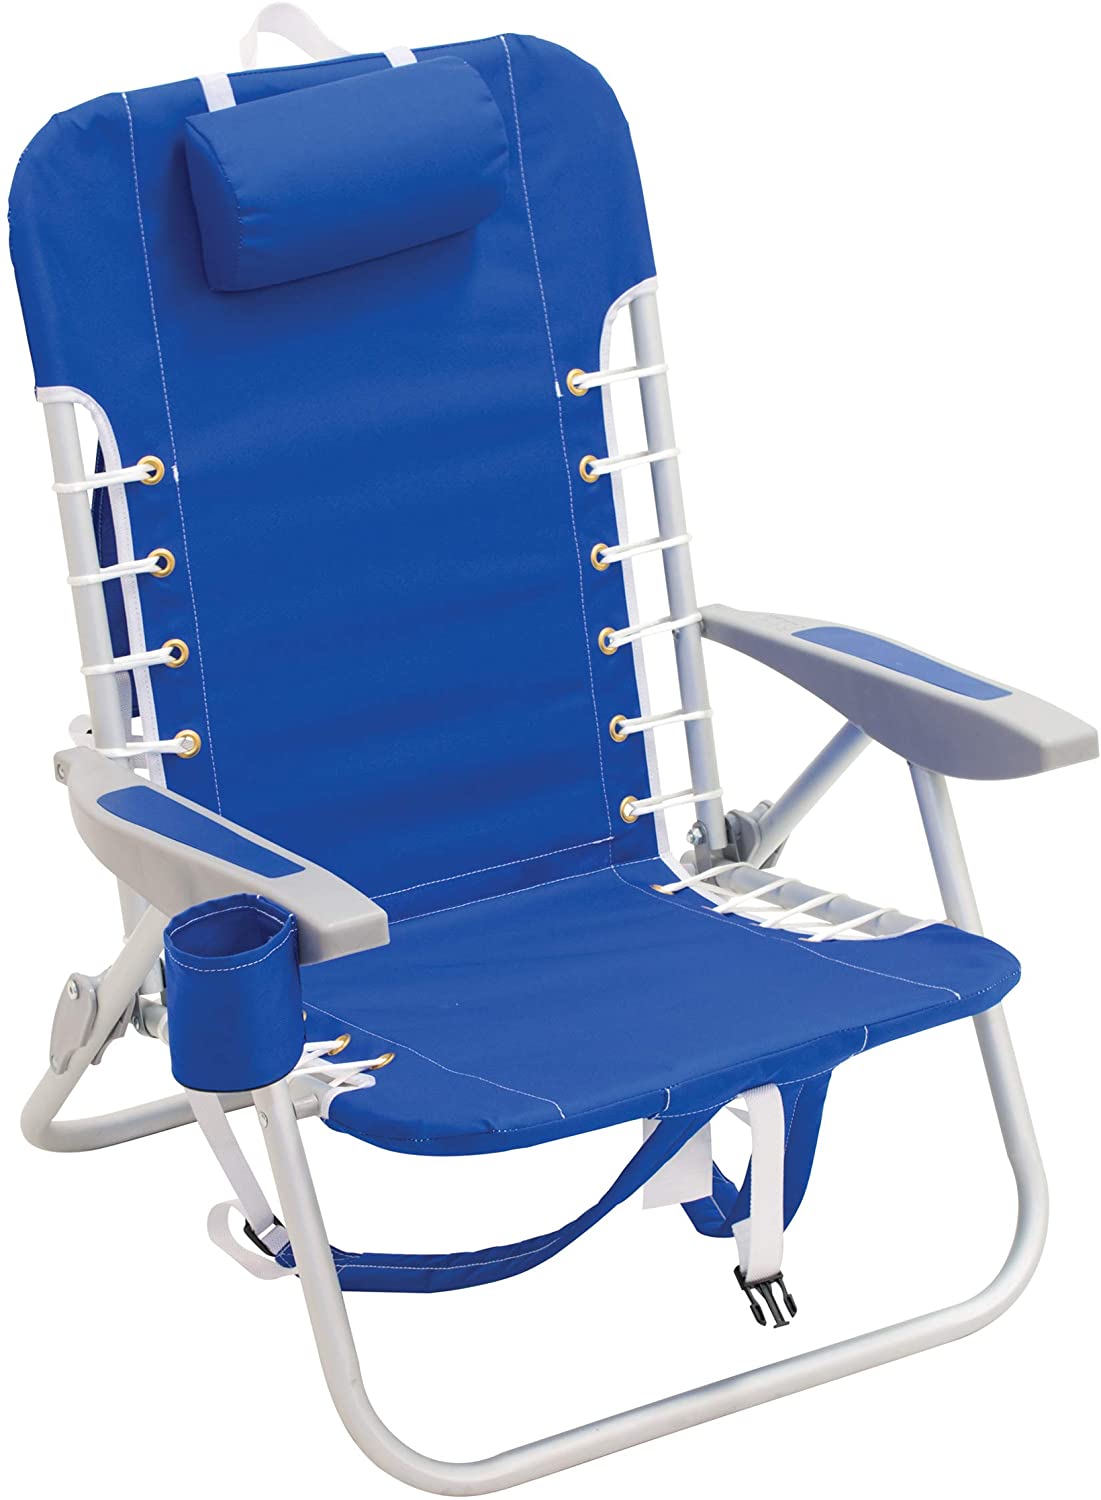 RIO Gear Aluminum Lightweight Foldable Beach Chair